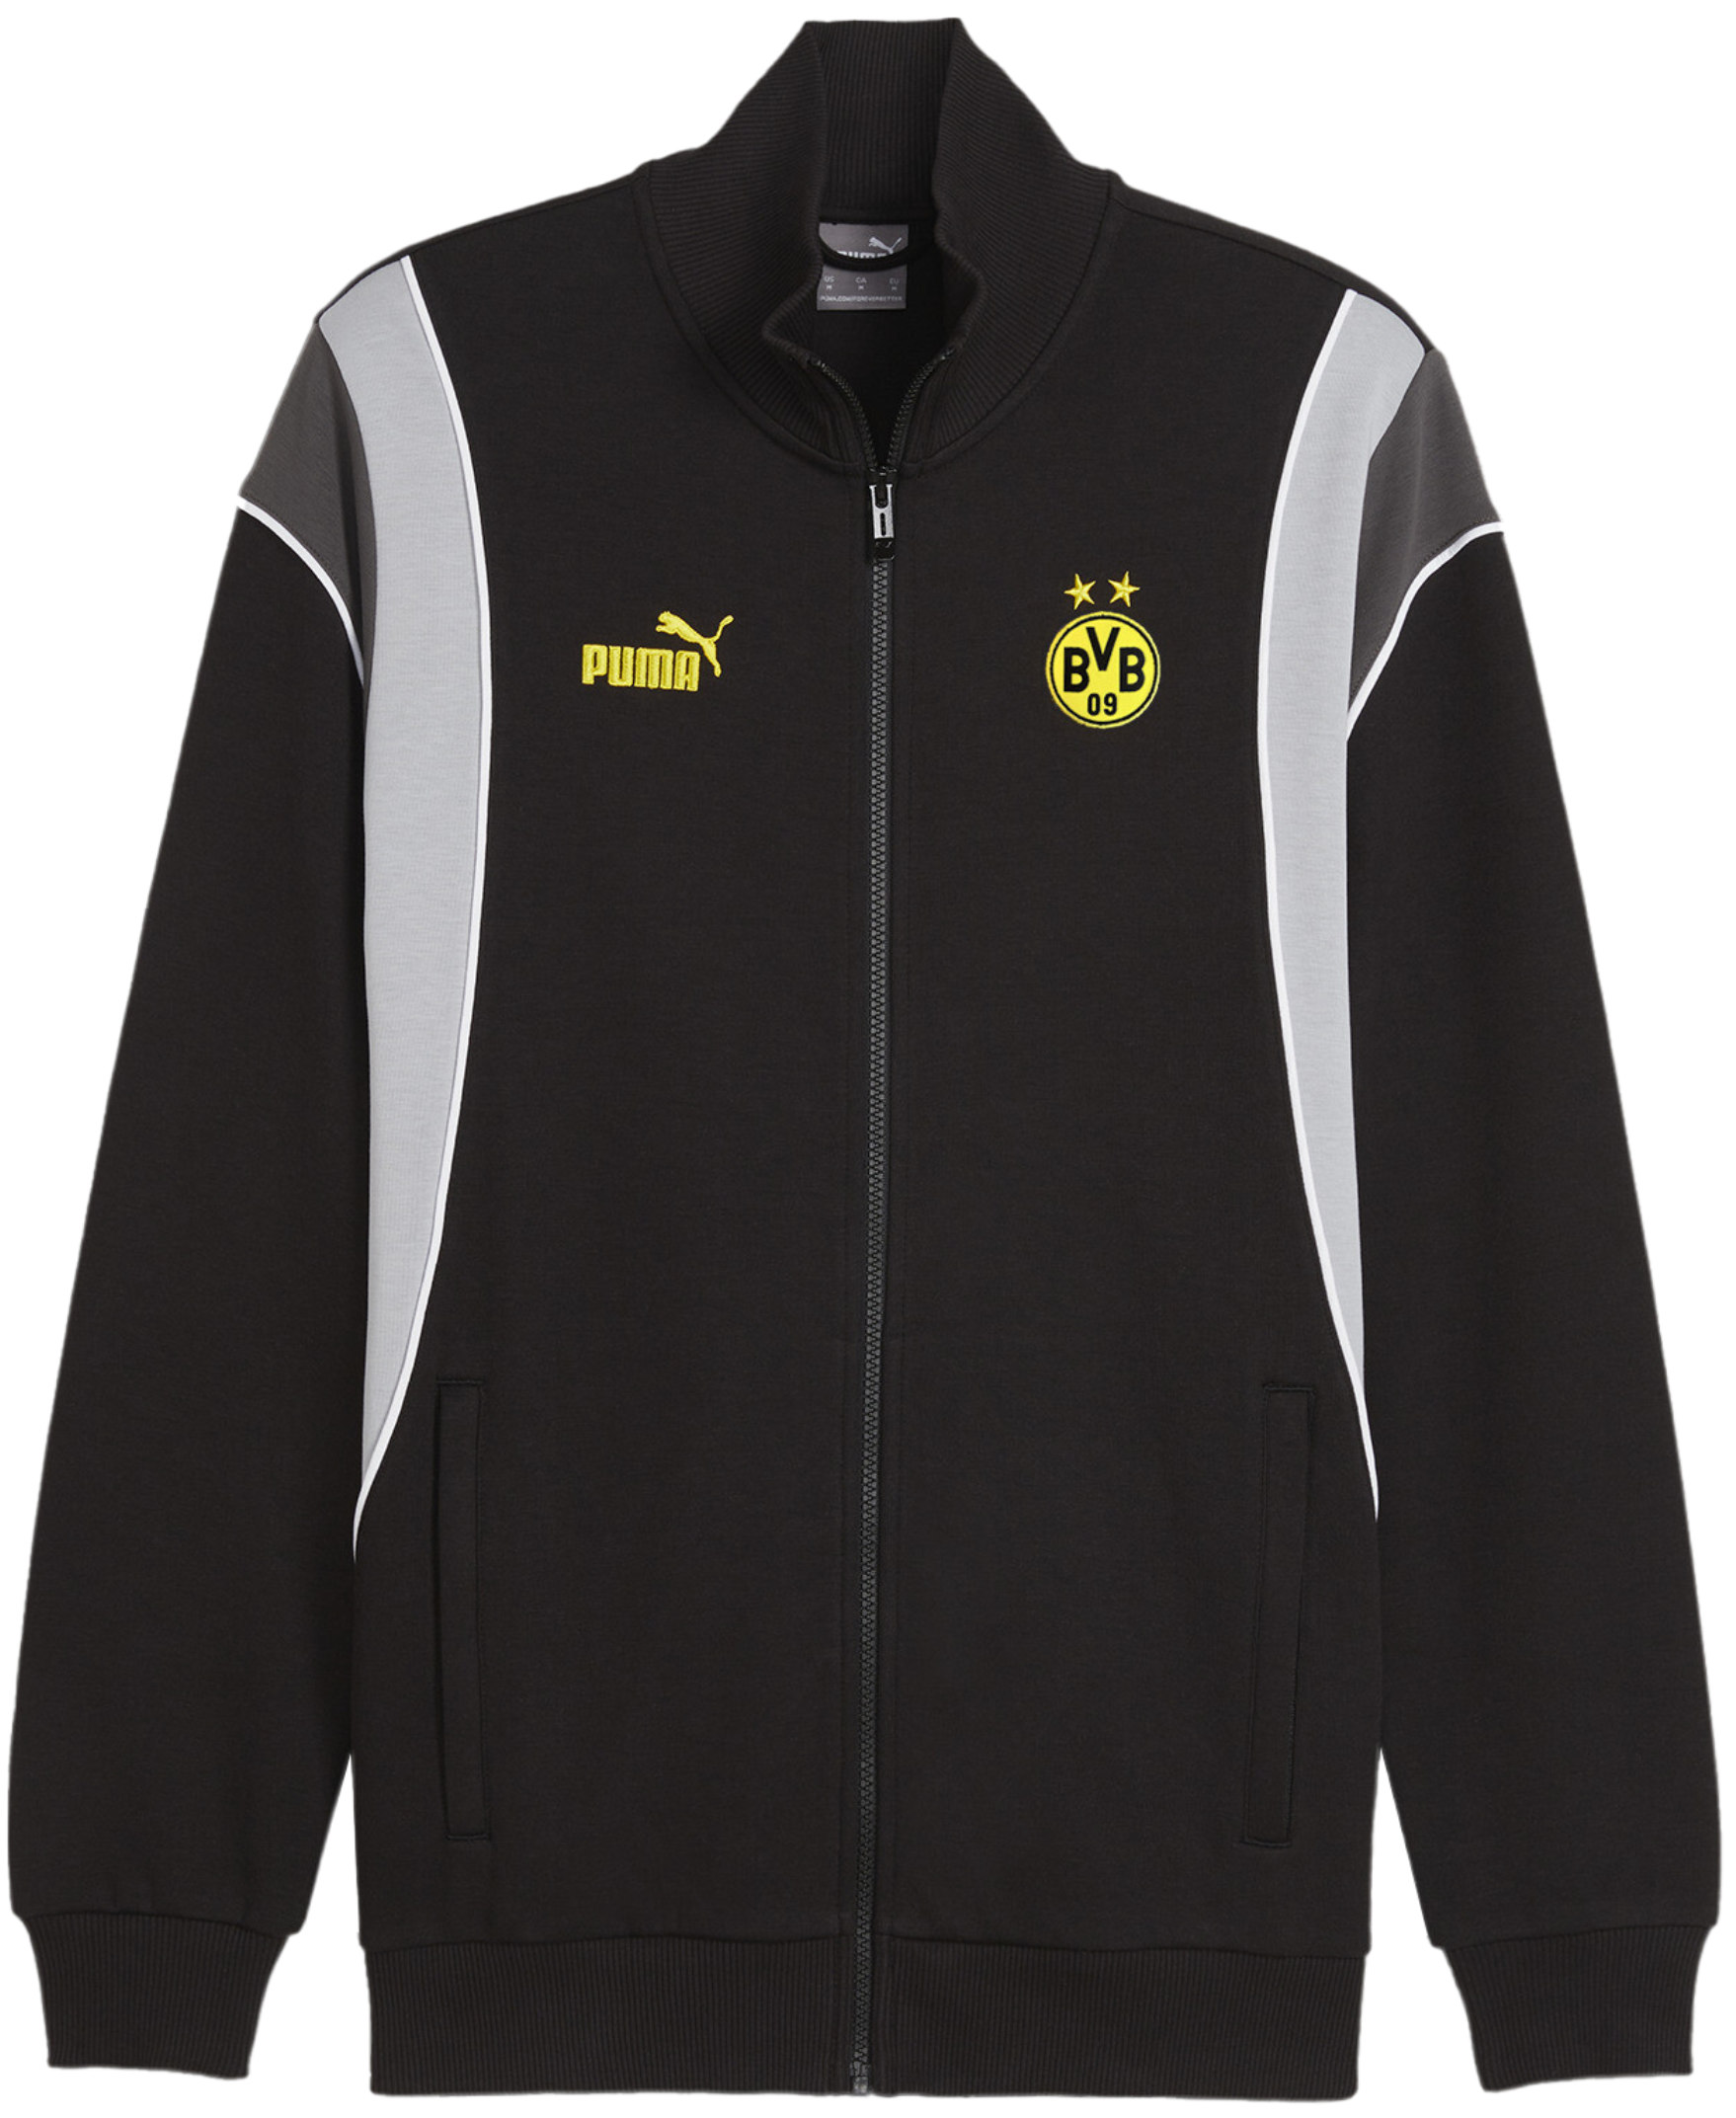 Puma BVB Dortmund Ftbl Archive Trainings jacket